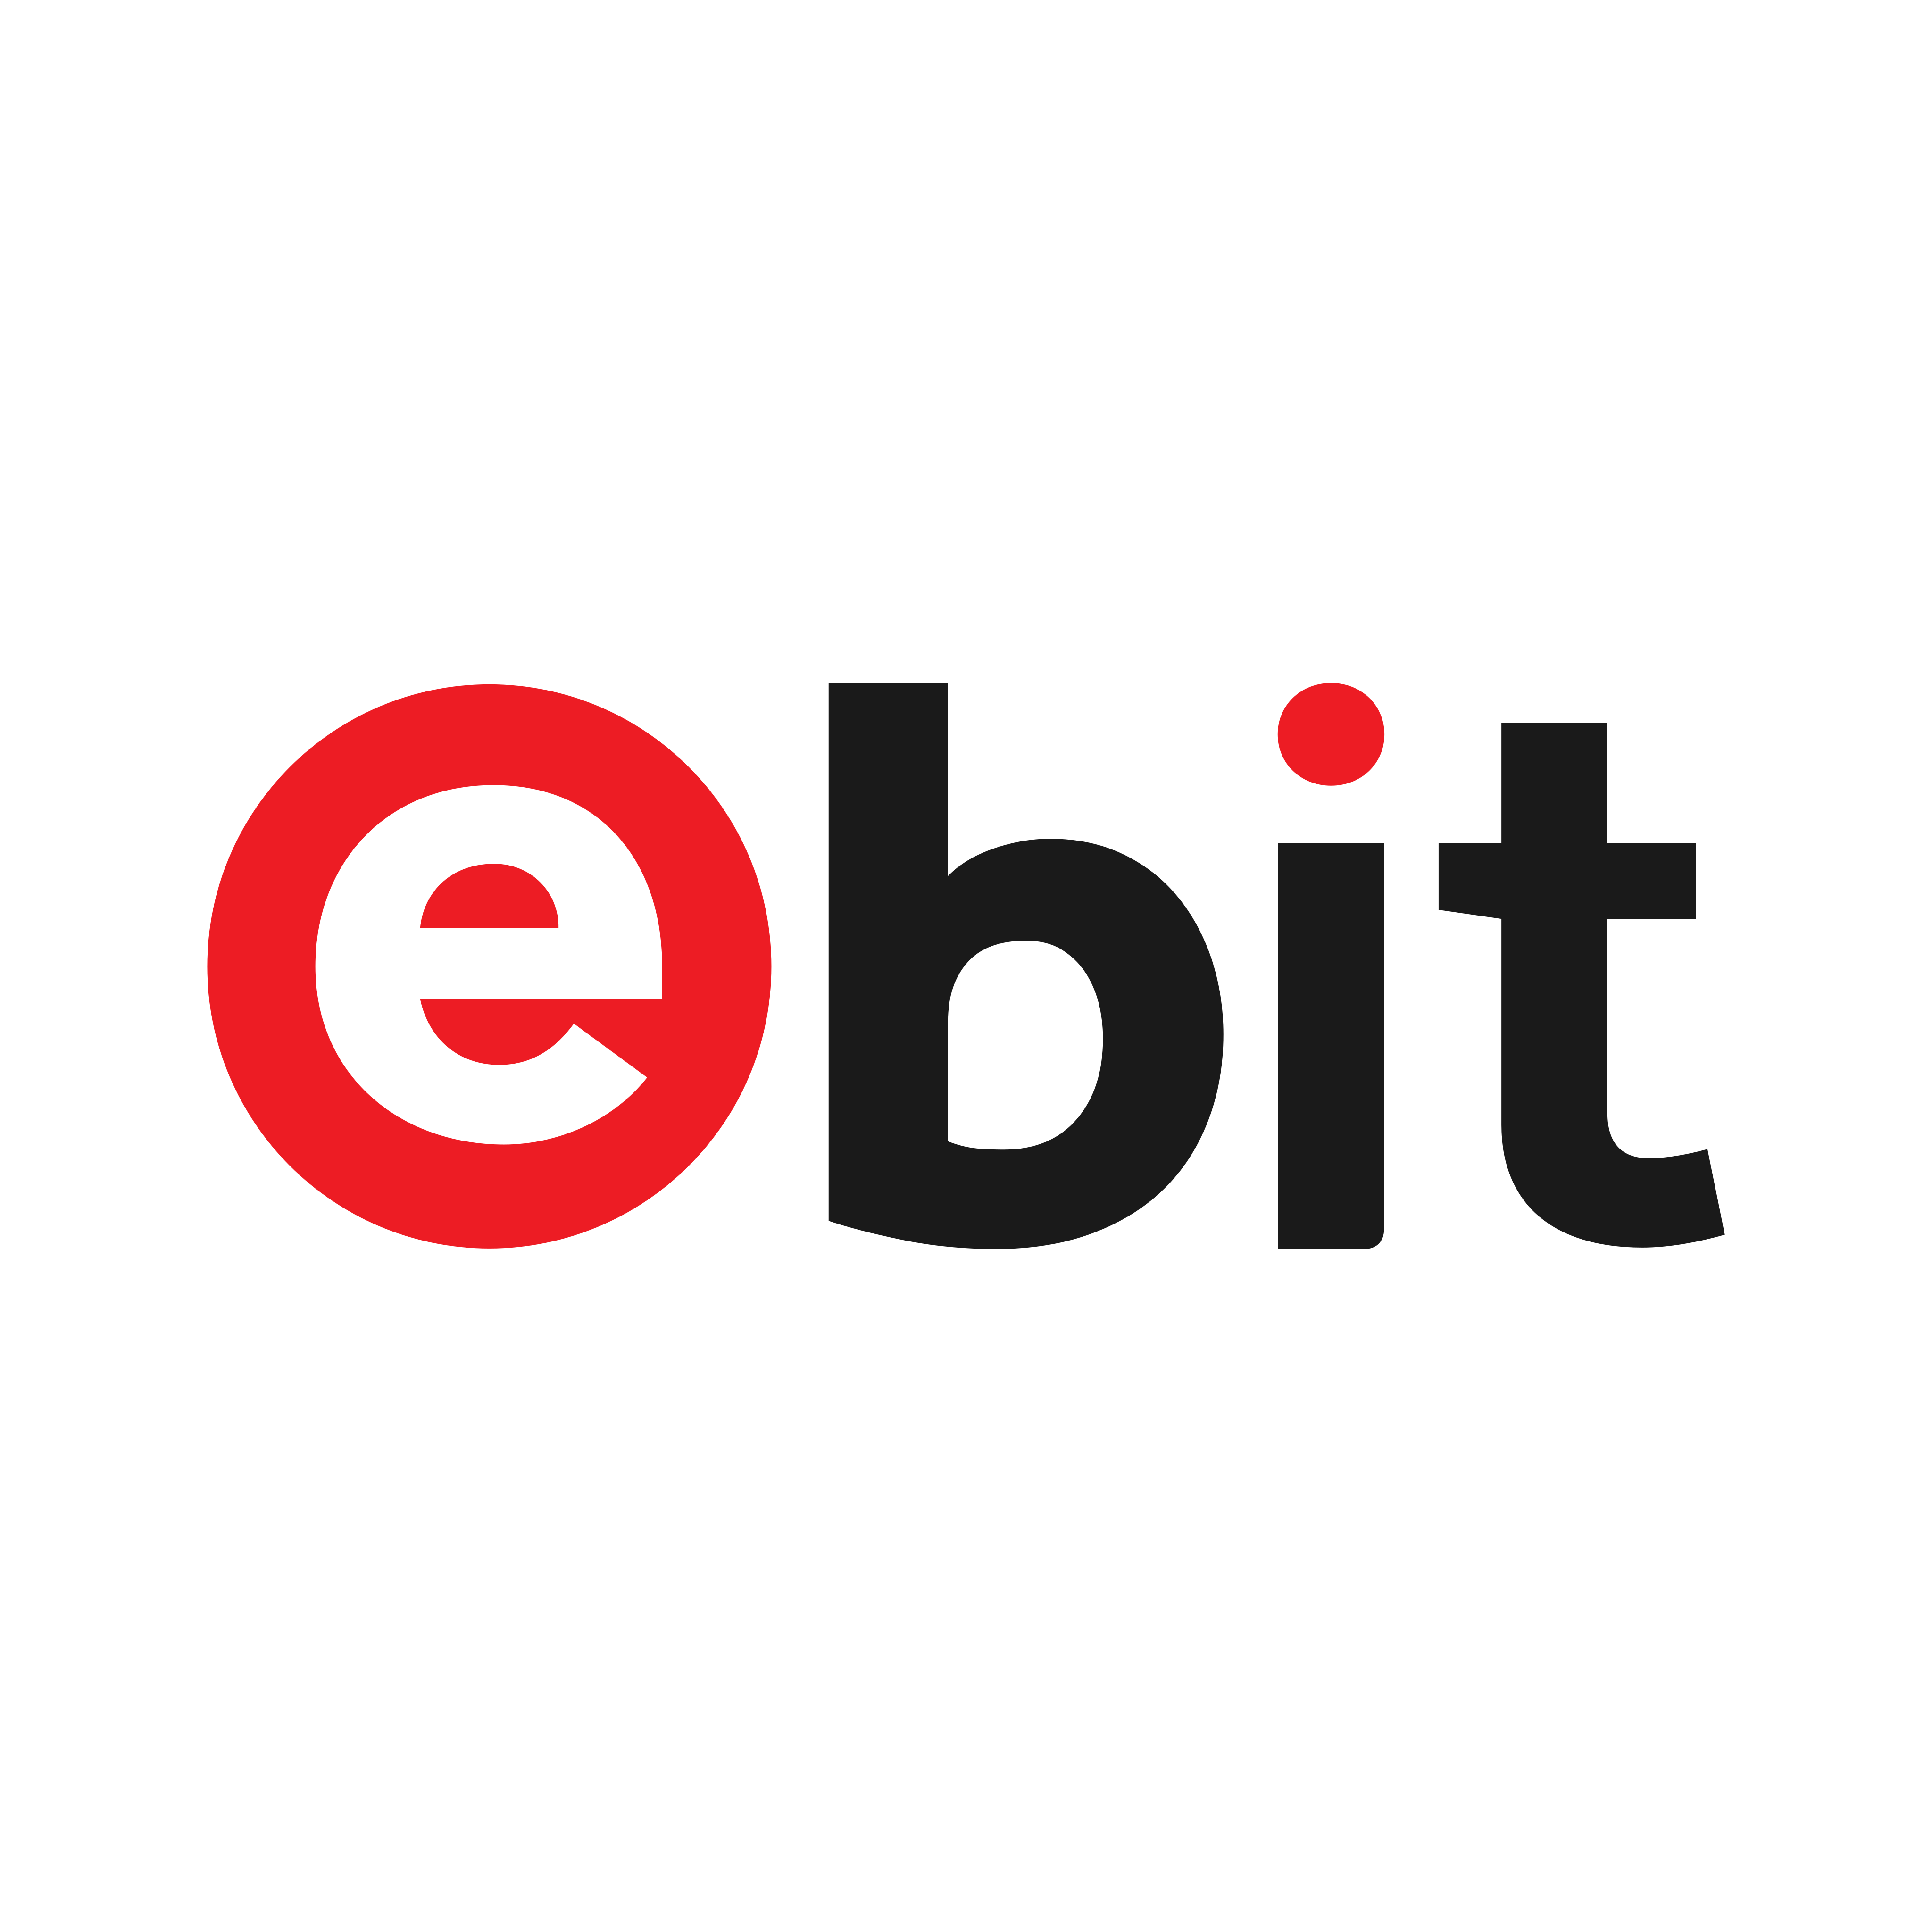 Ebit Logo PNG.